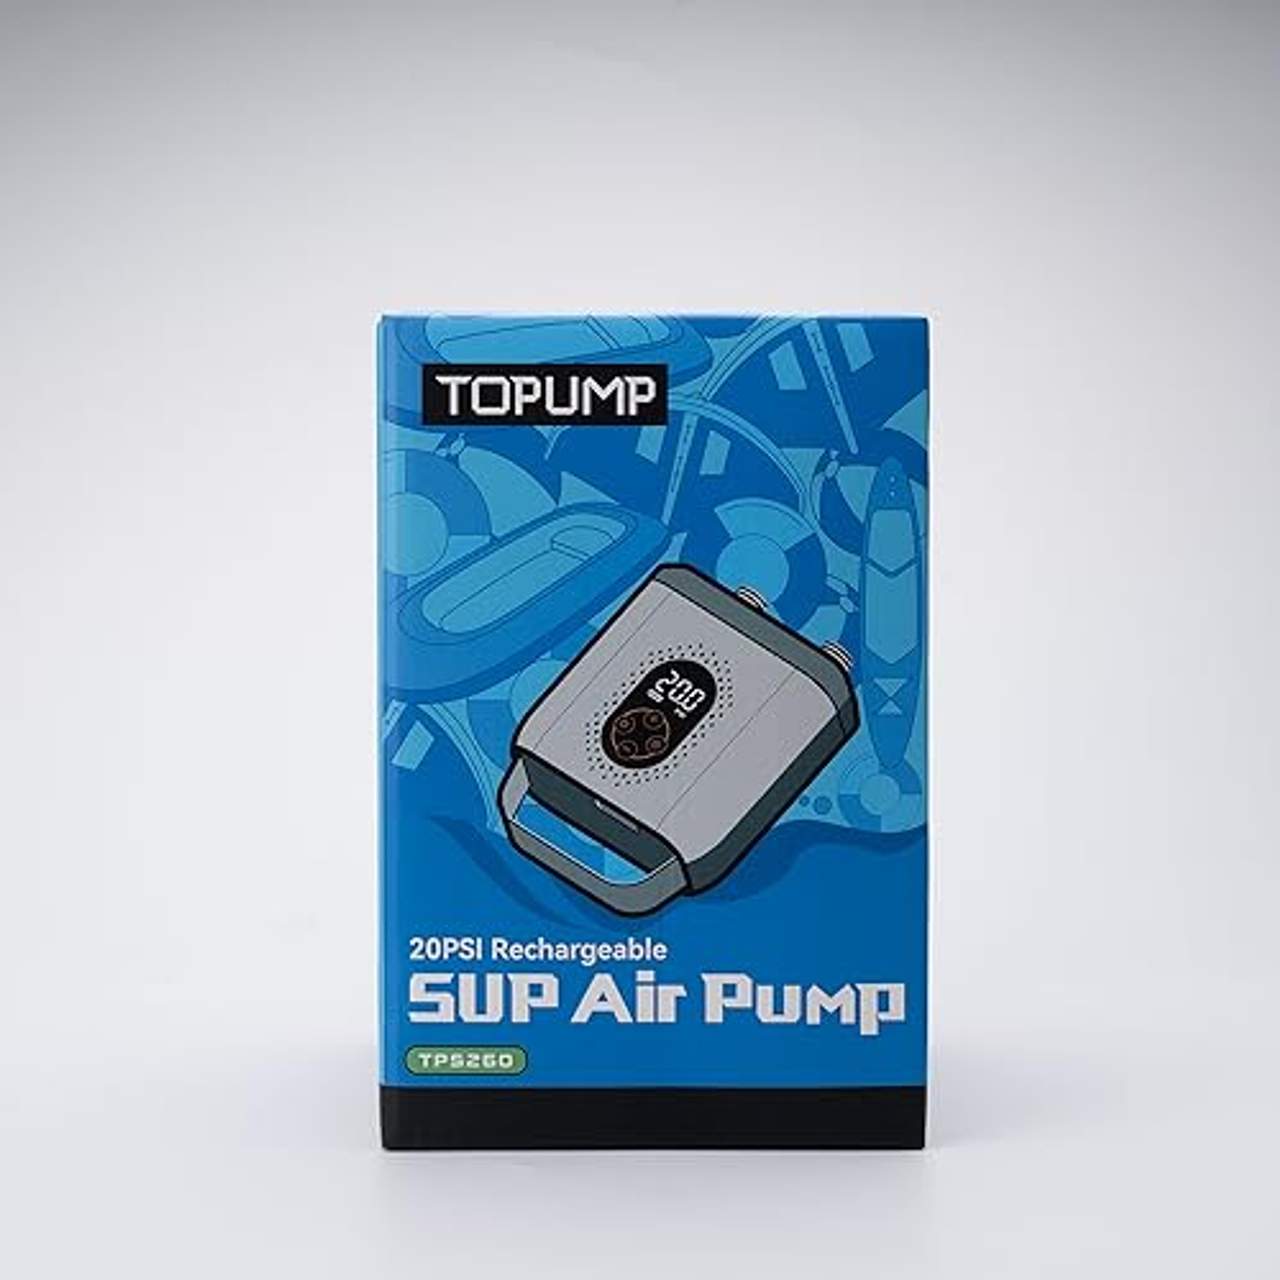 TOPUMP 20PSI Elektrische SUP-Pumpe TPS260